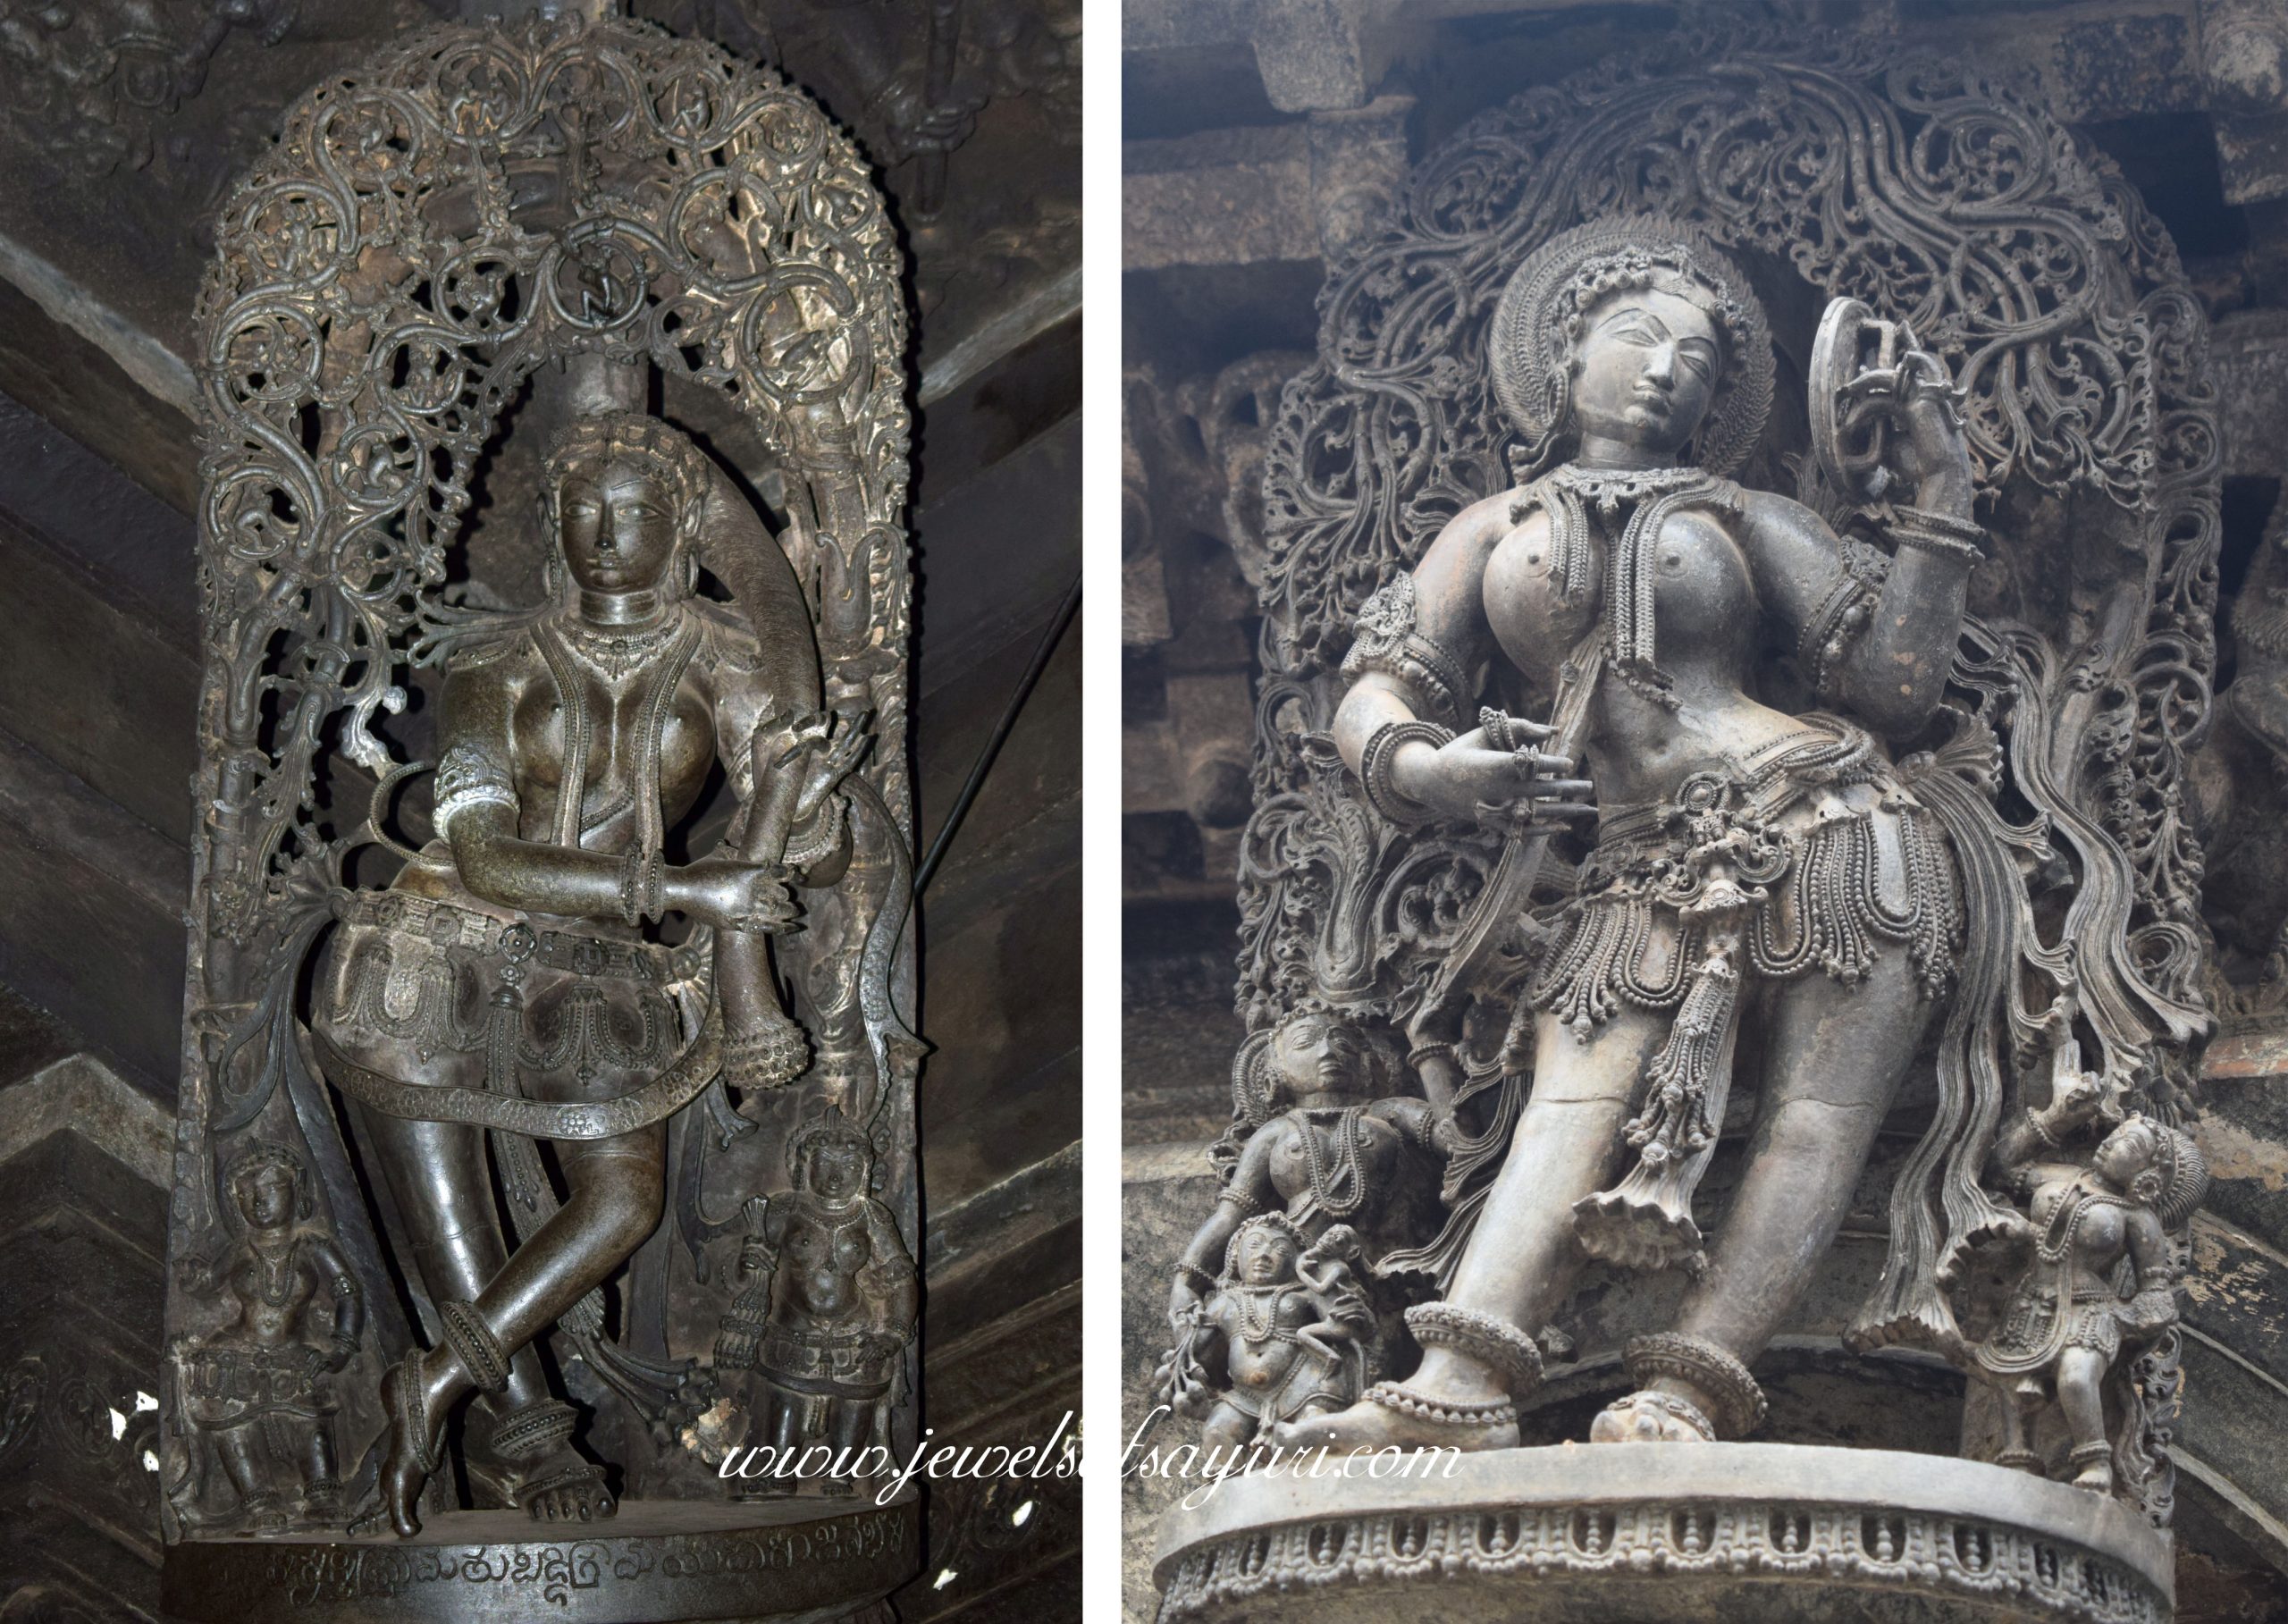 Adornment in Ancient India – Sola Shringar